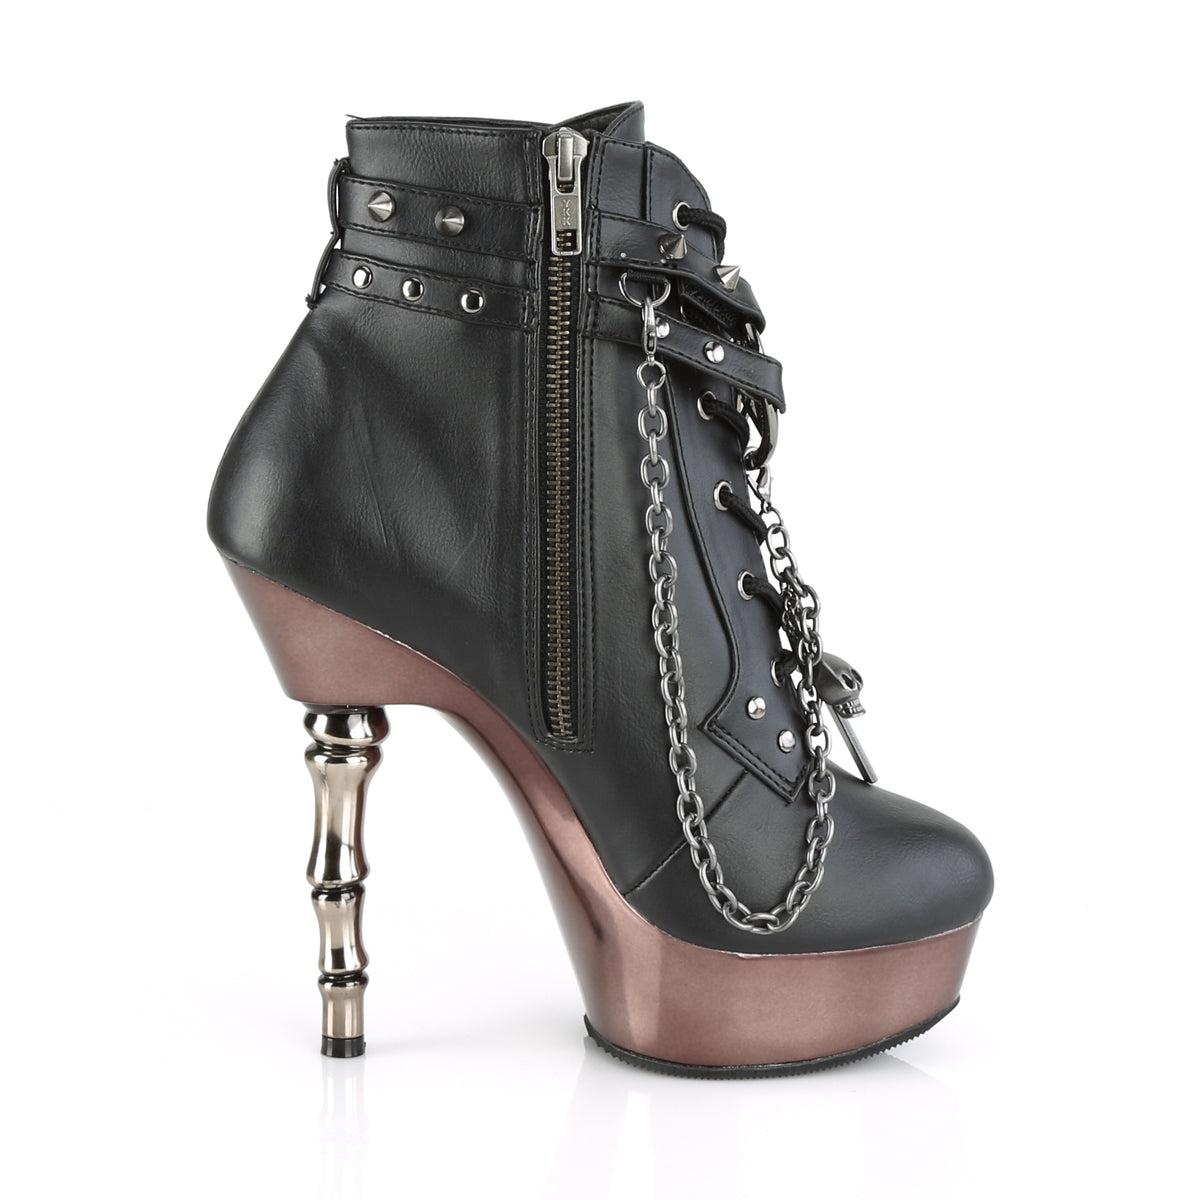 MUERTO-1001 Demonia Black Faux Leather/Pewter Chrome Women's Mid-Calf & Knee High Boots [Demonia Cult Alternative Footwear]